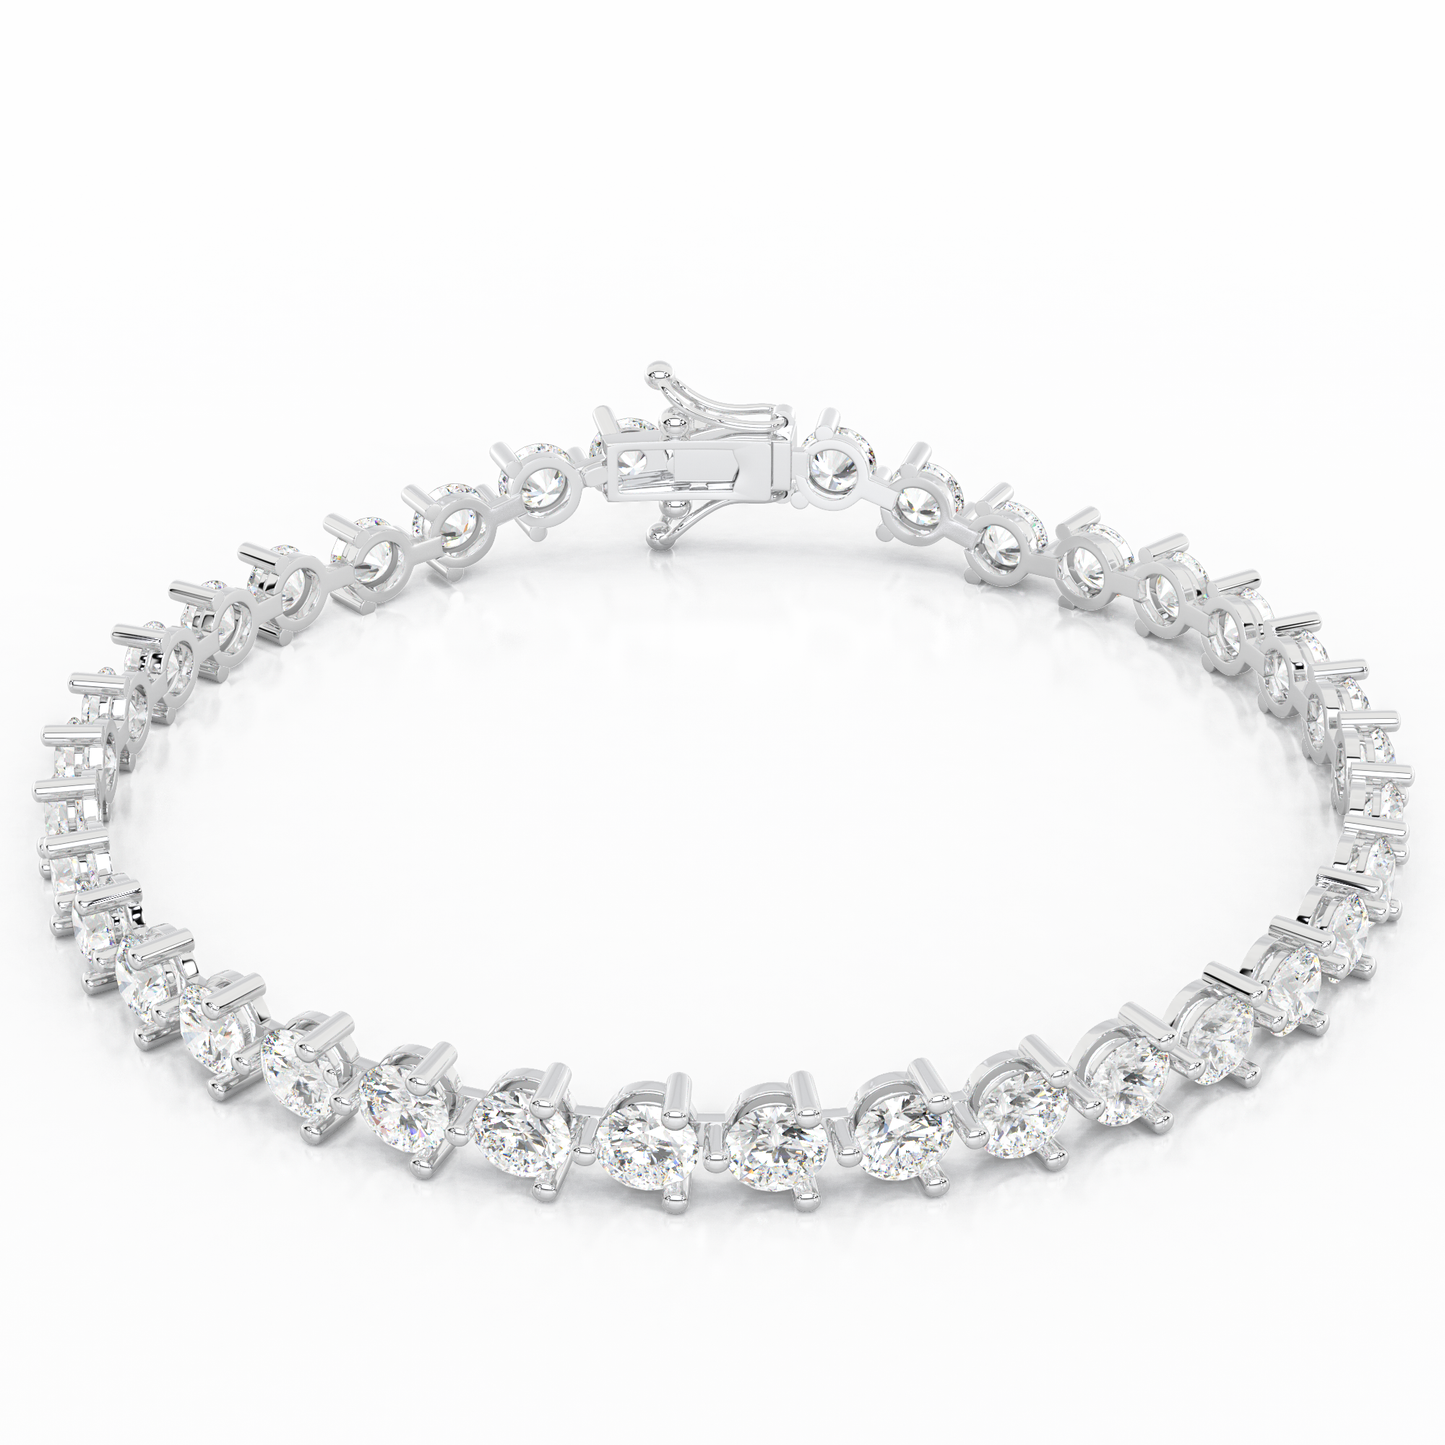 4.00cts+ 3-Prong Lab Grown Diamond Bracelet <Affordable>